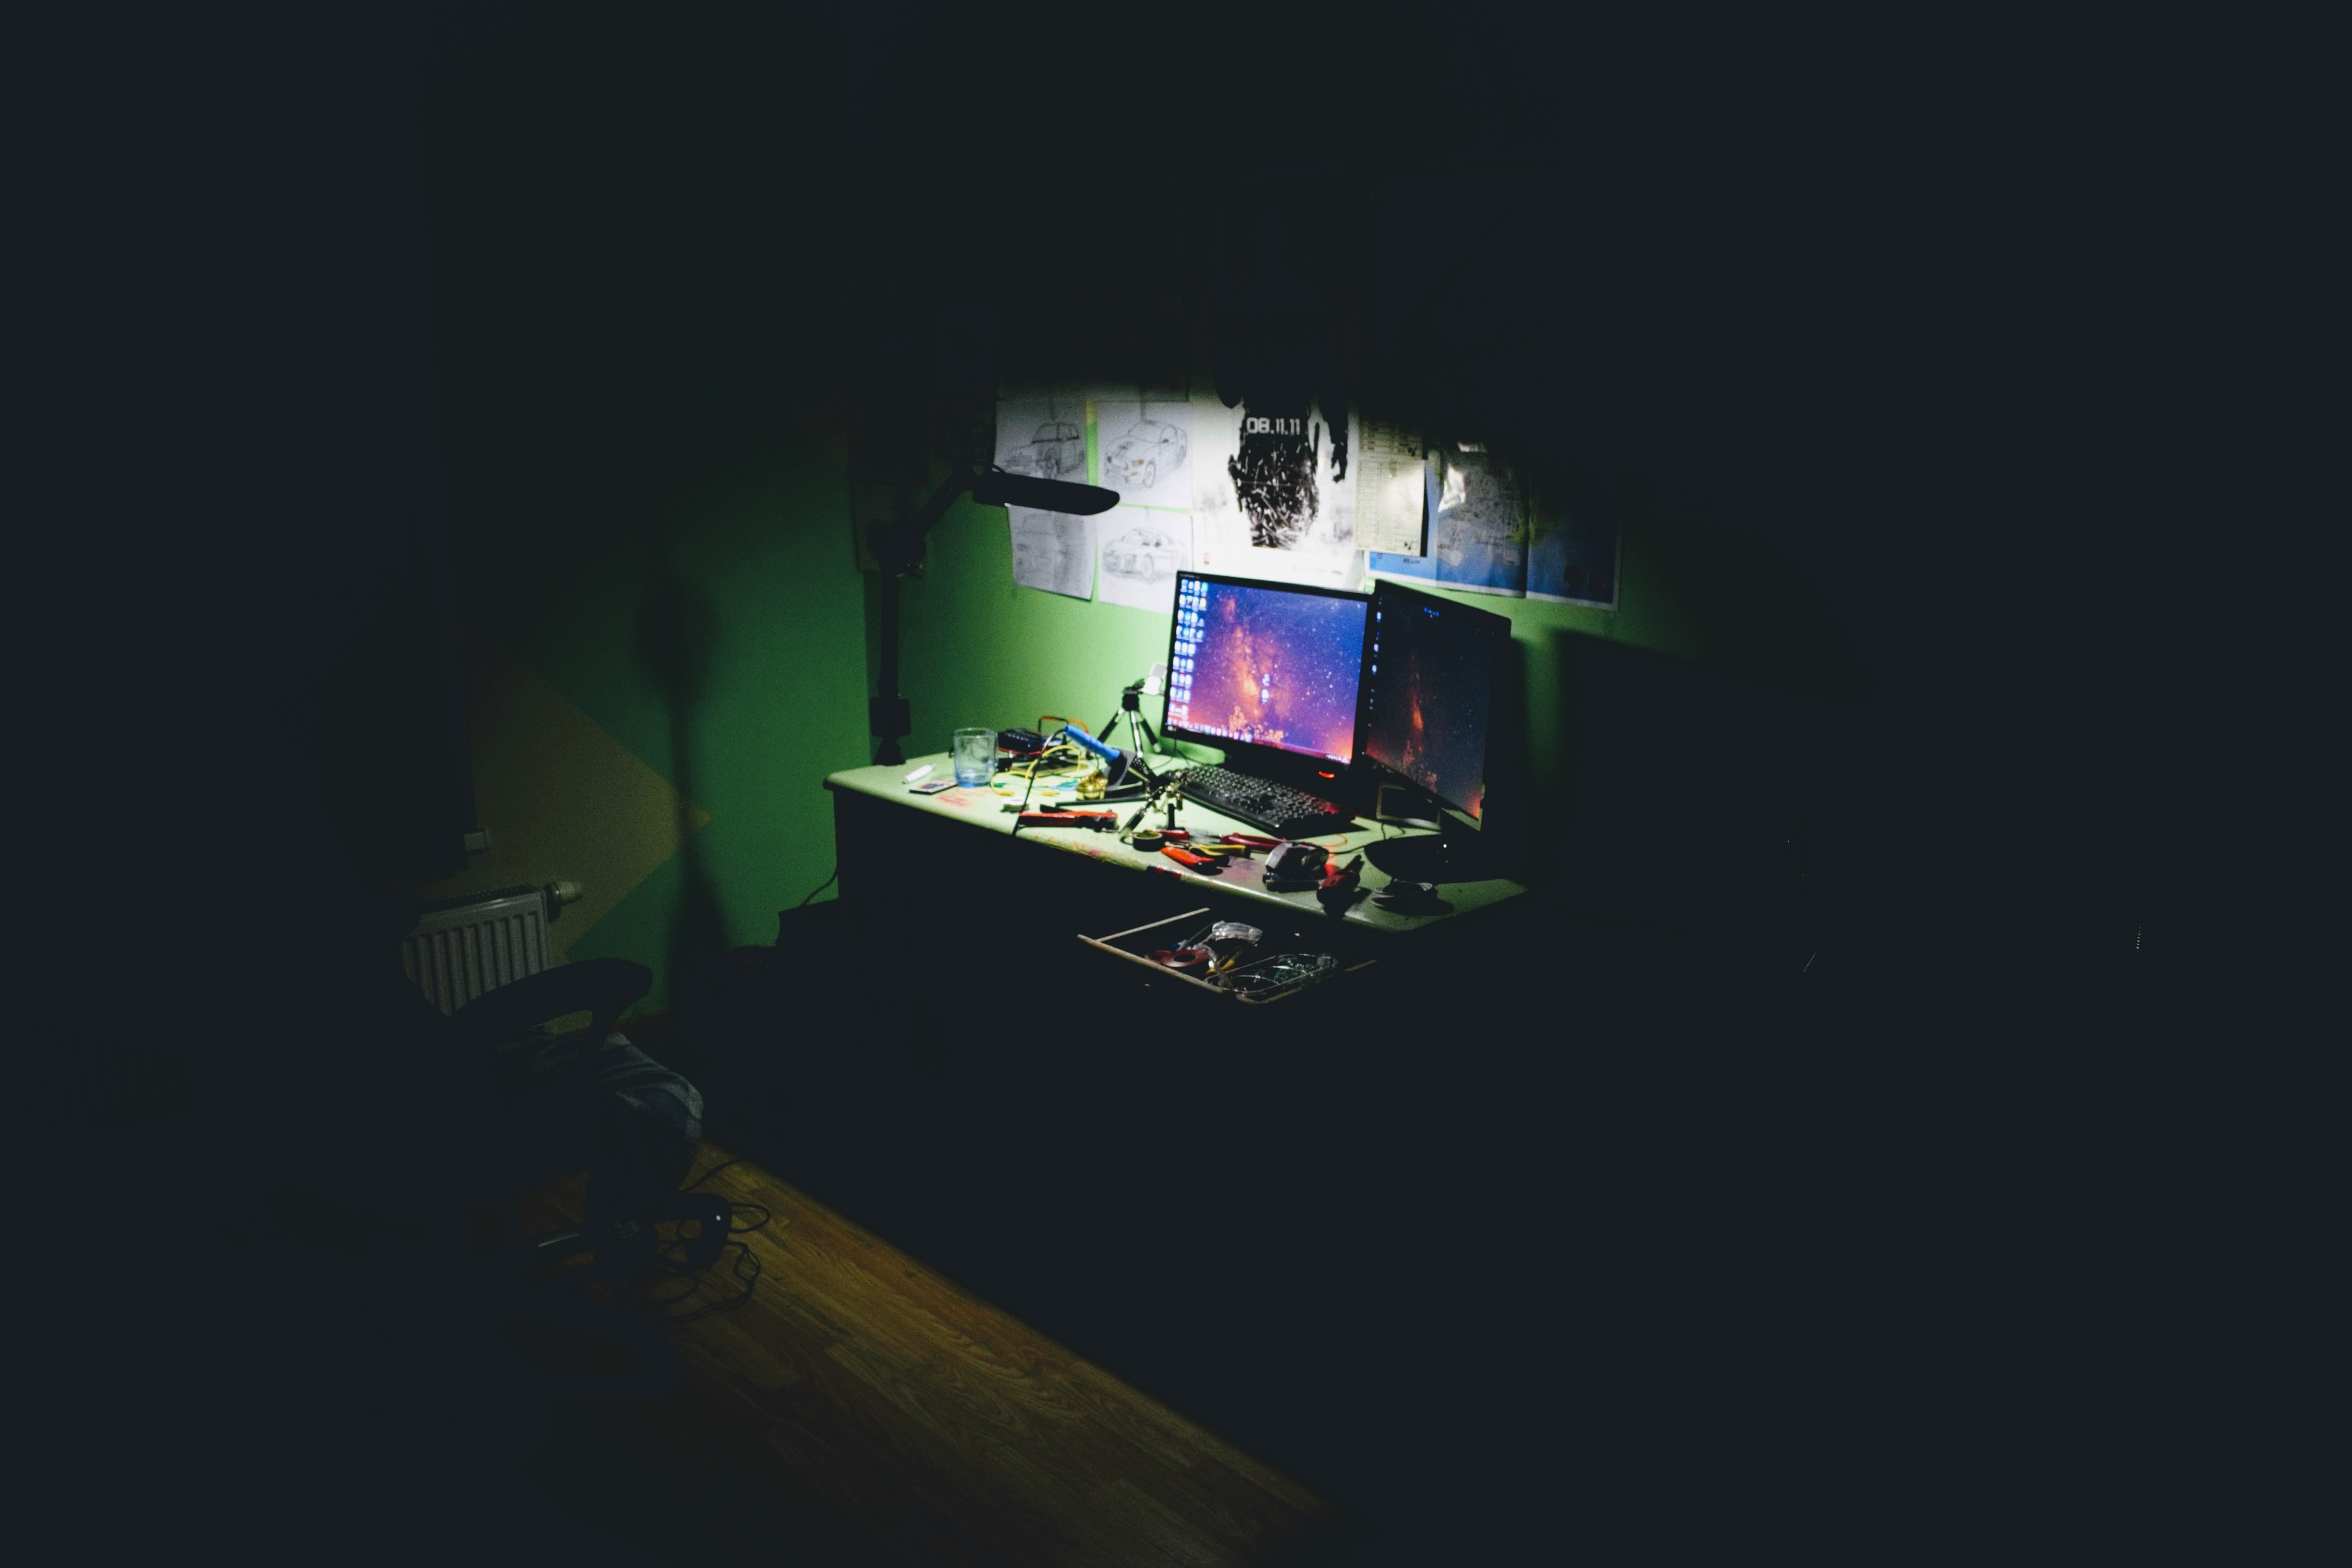 Computer in the dark